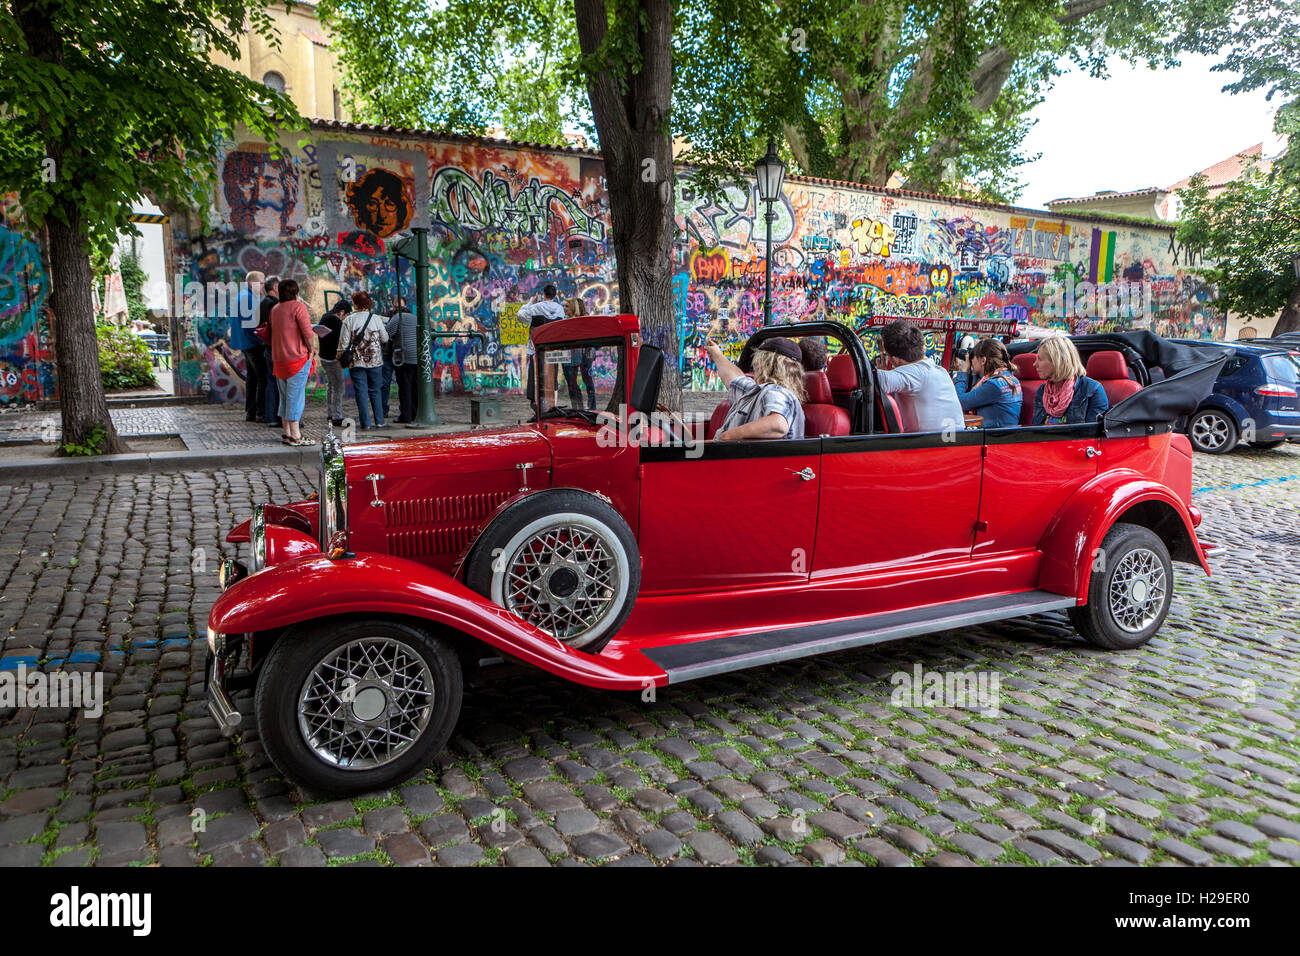 John Lennon Wall Praga gente en City tour, un viejo coche de época Foto de stock